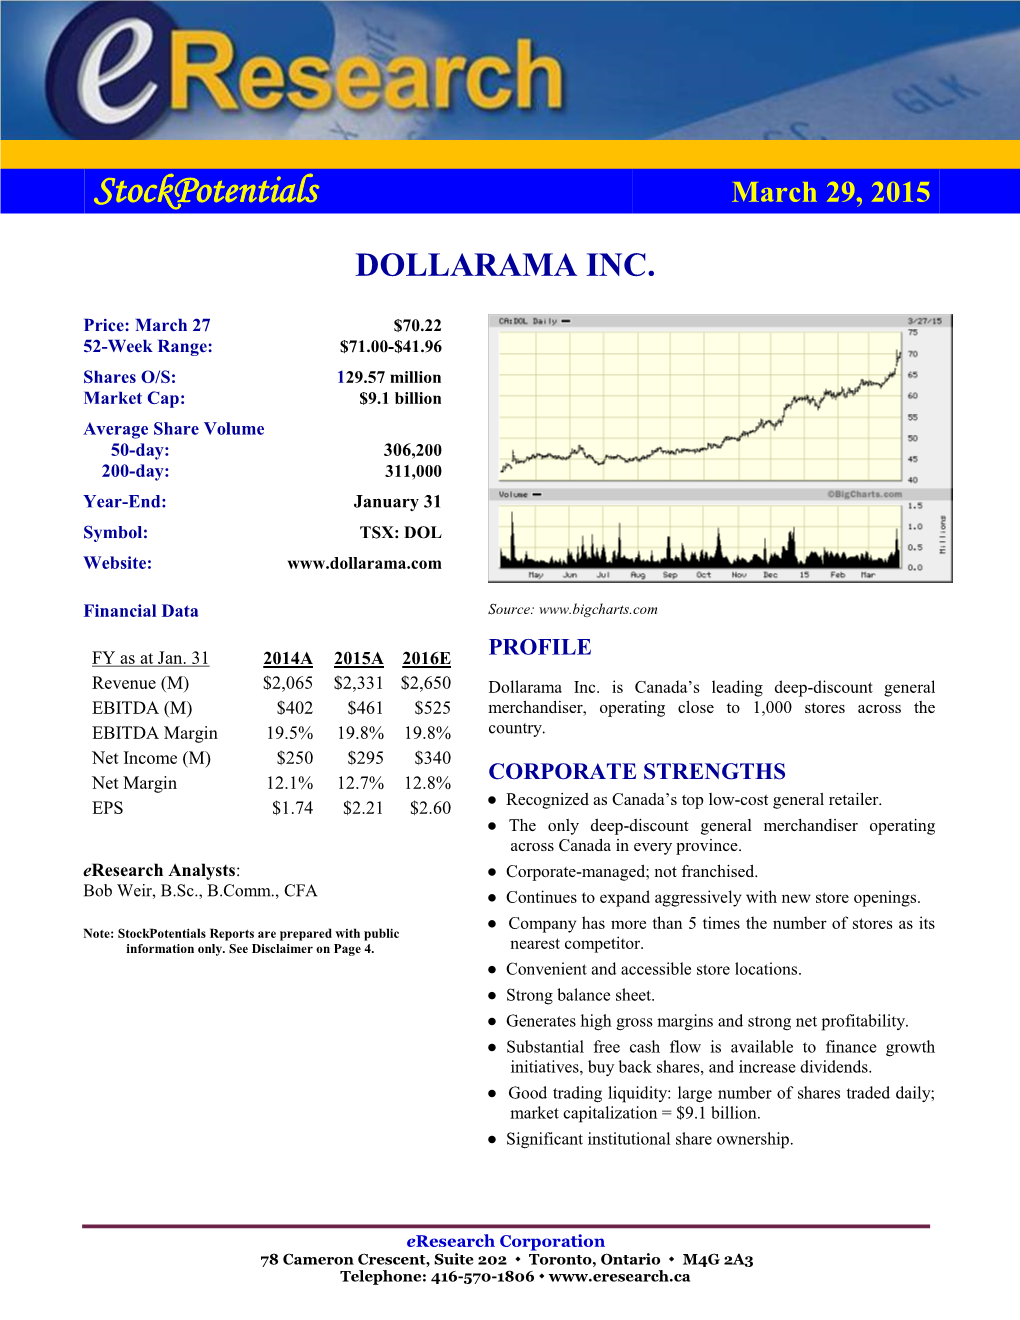 DOLLARAMA INC. Stockpotentials